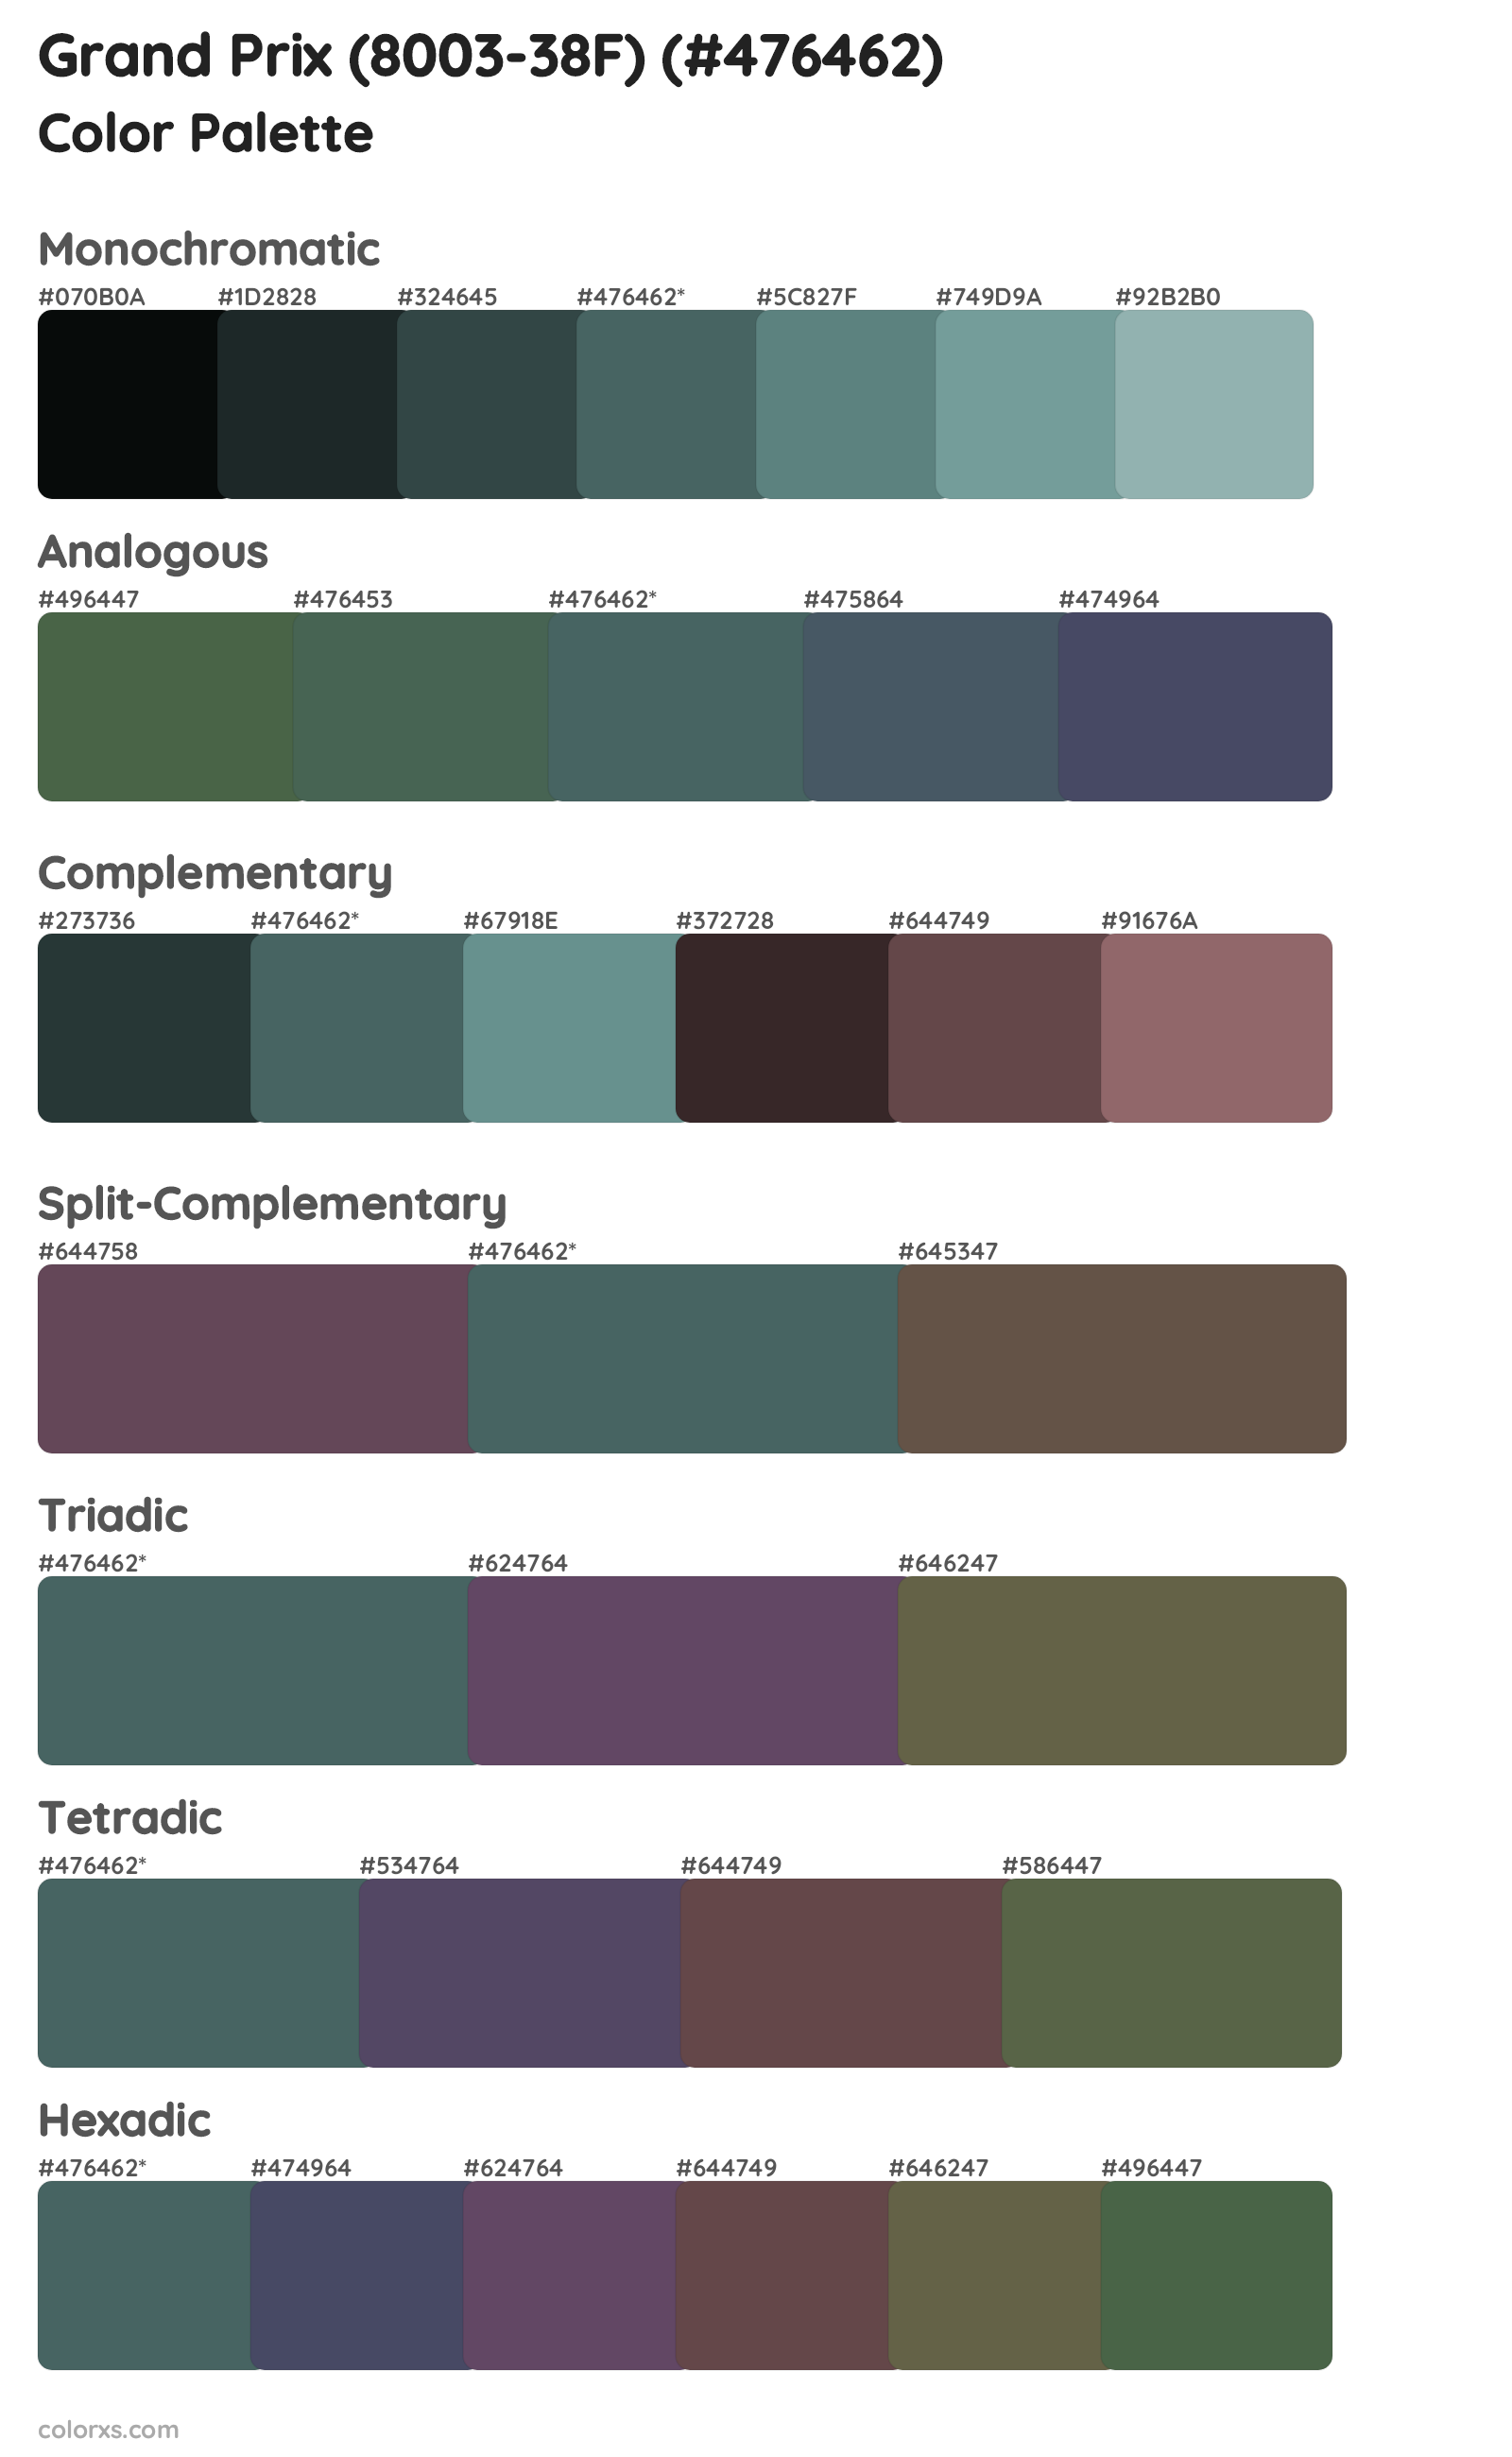 Grand Prix (8003-38F) Color Scheme Palettes